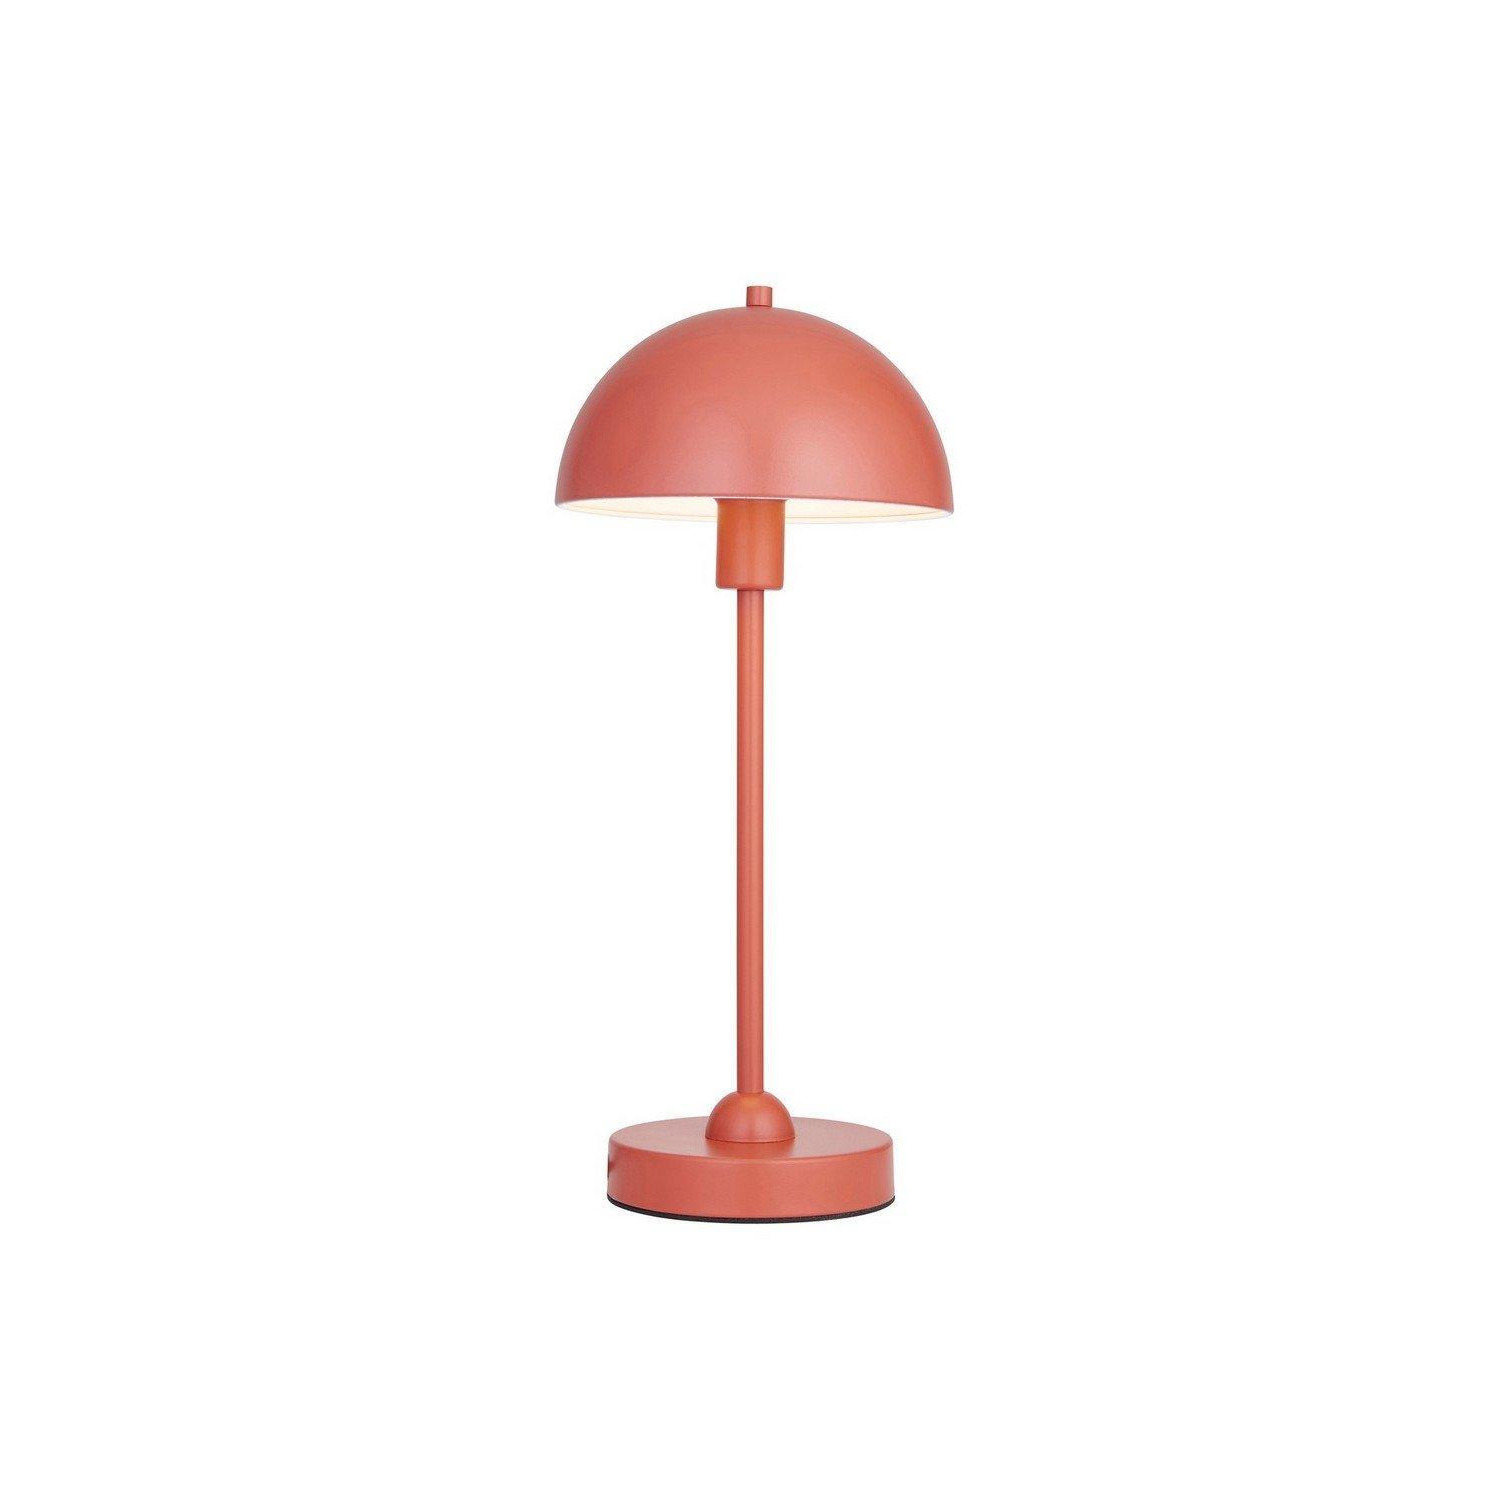 Saroma Complete Table Lamp Matt Terracotta Paint - image 1